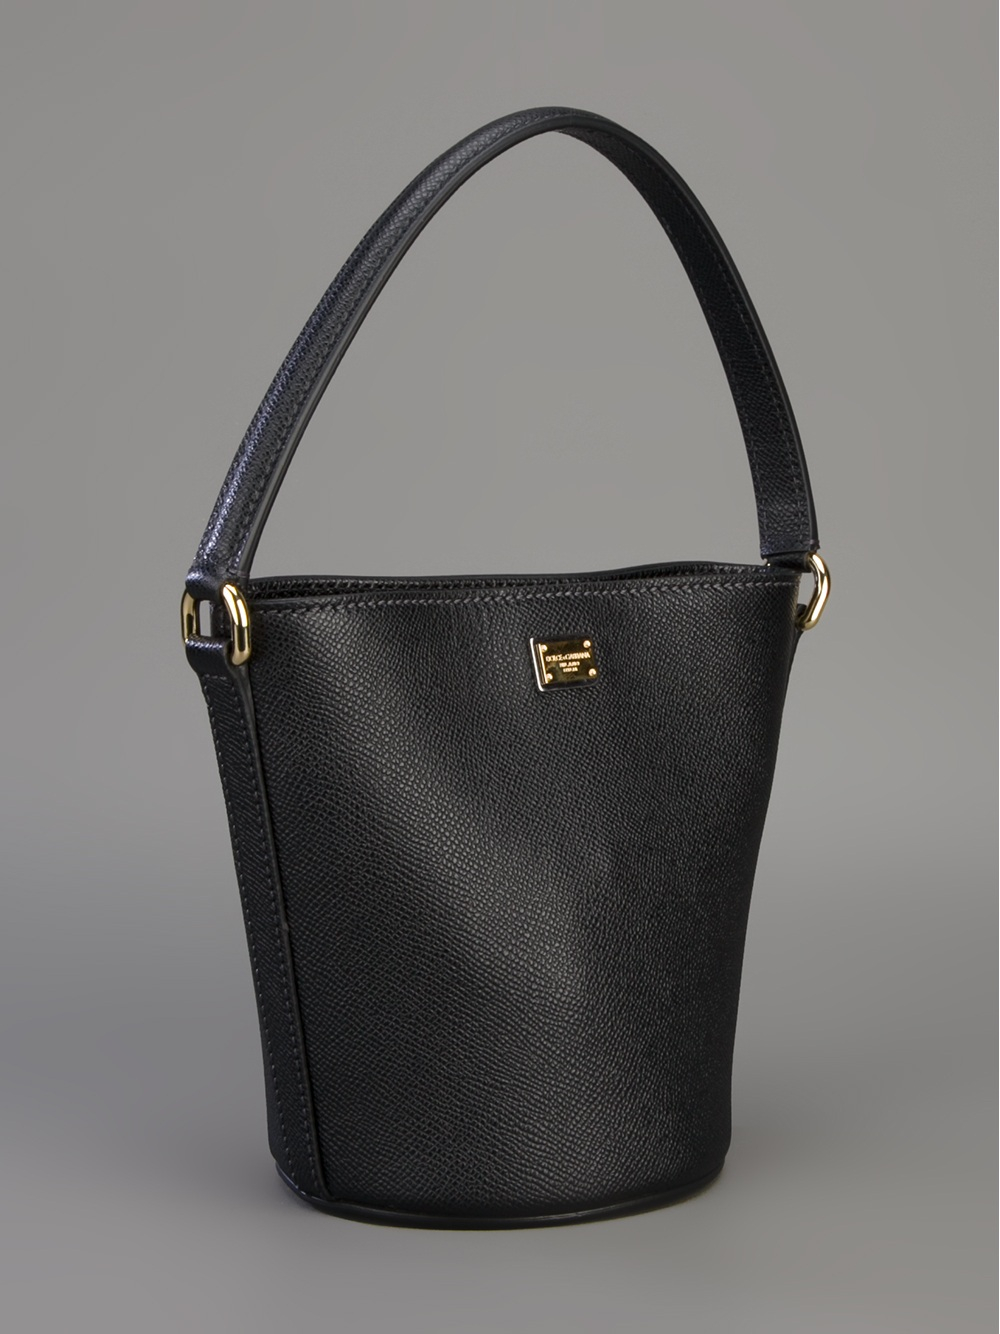 Dolce & Gabbana Small Bucket Bag in Black - Lyst